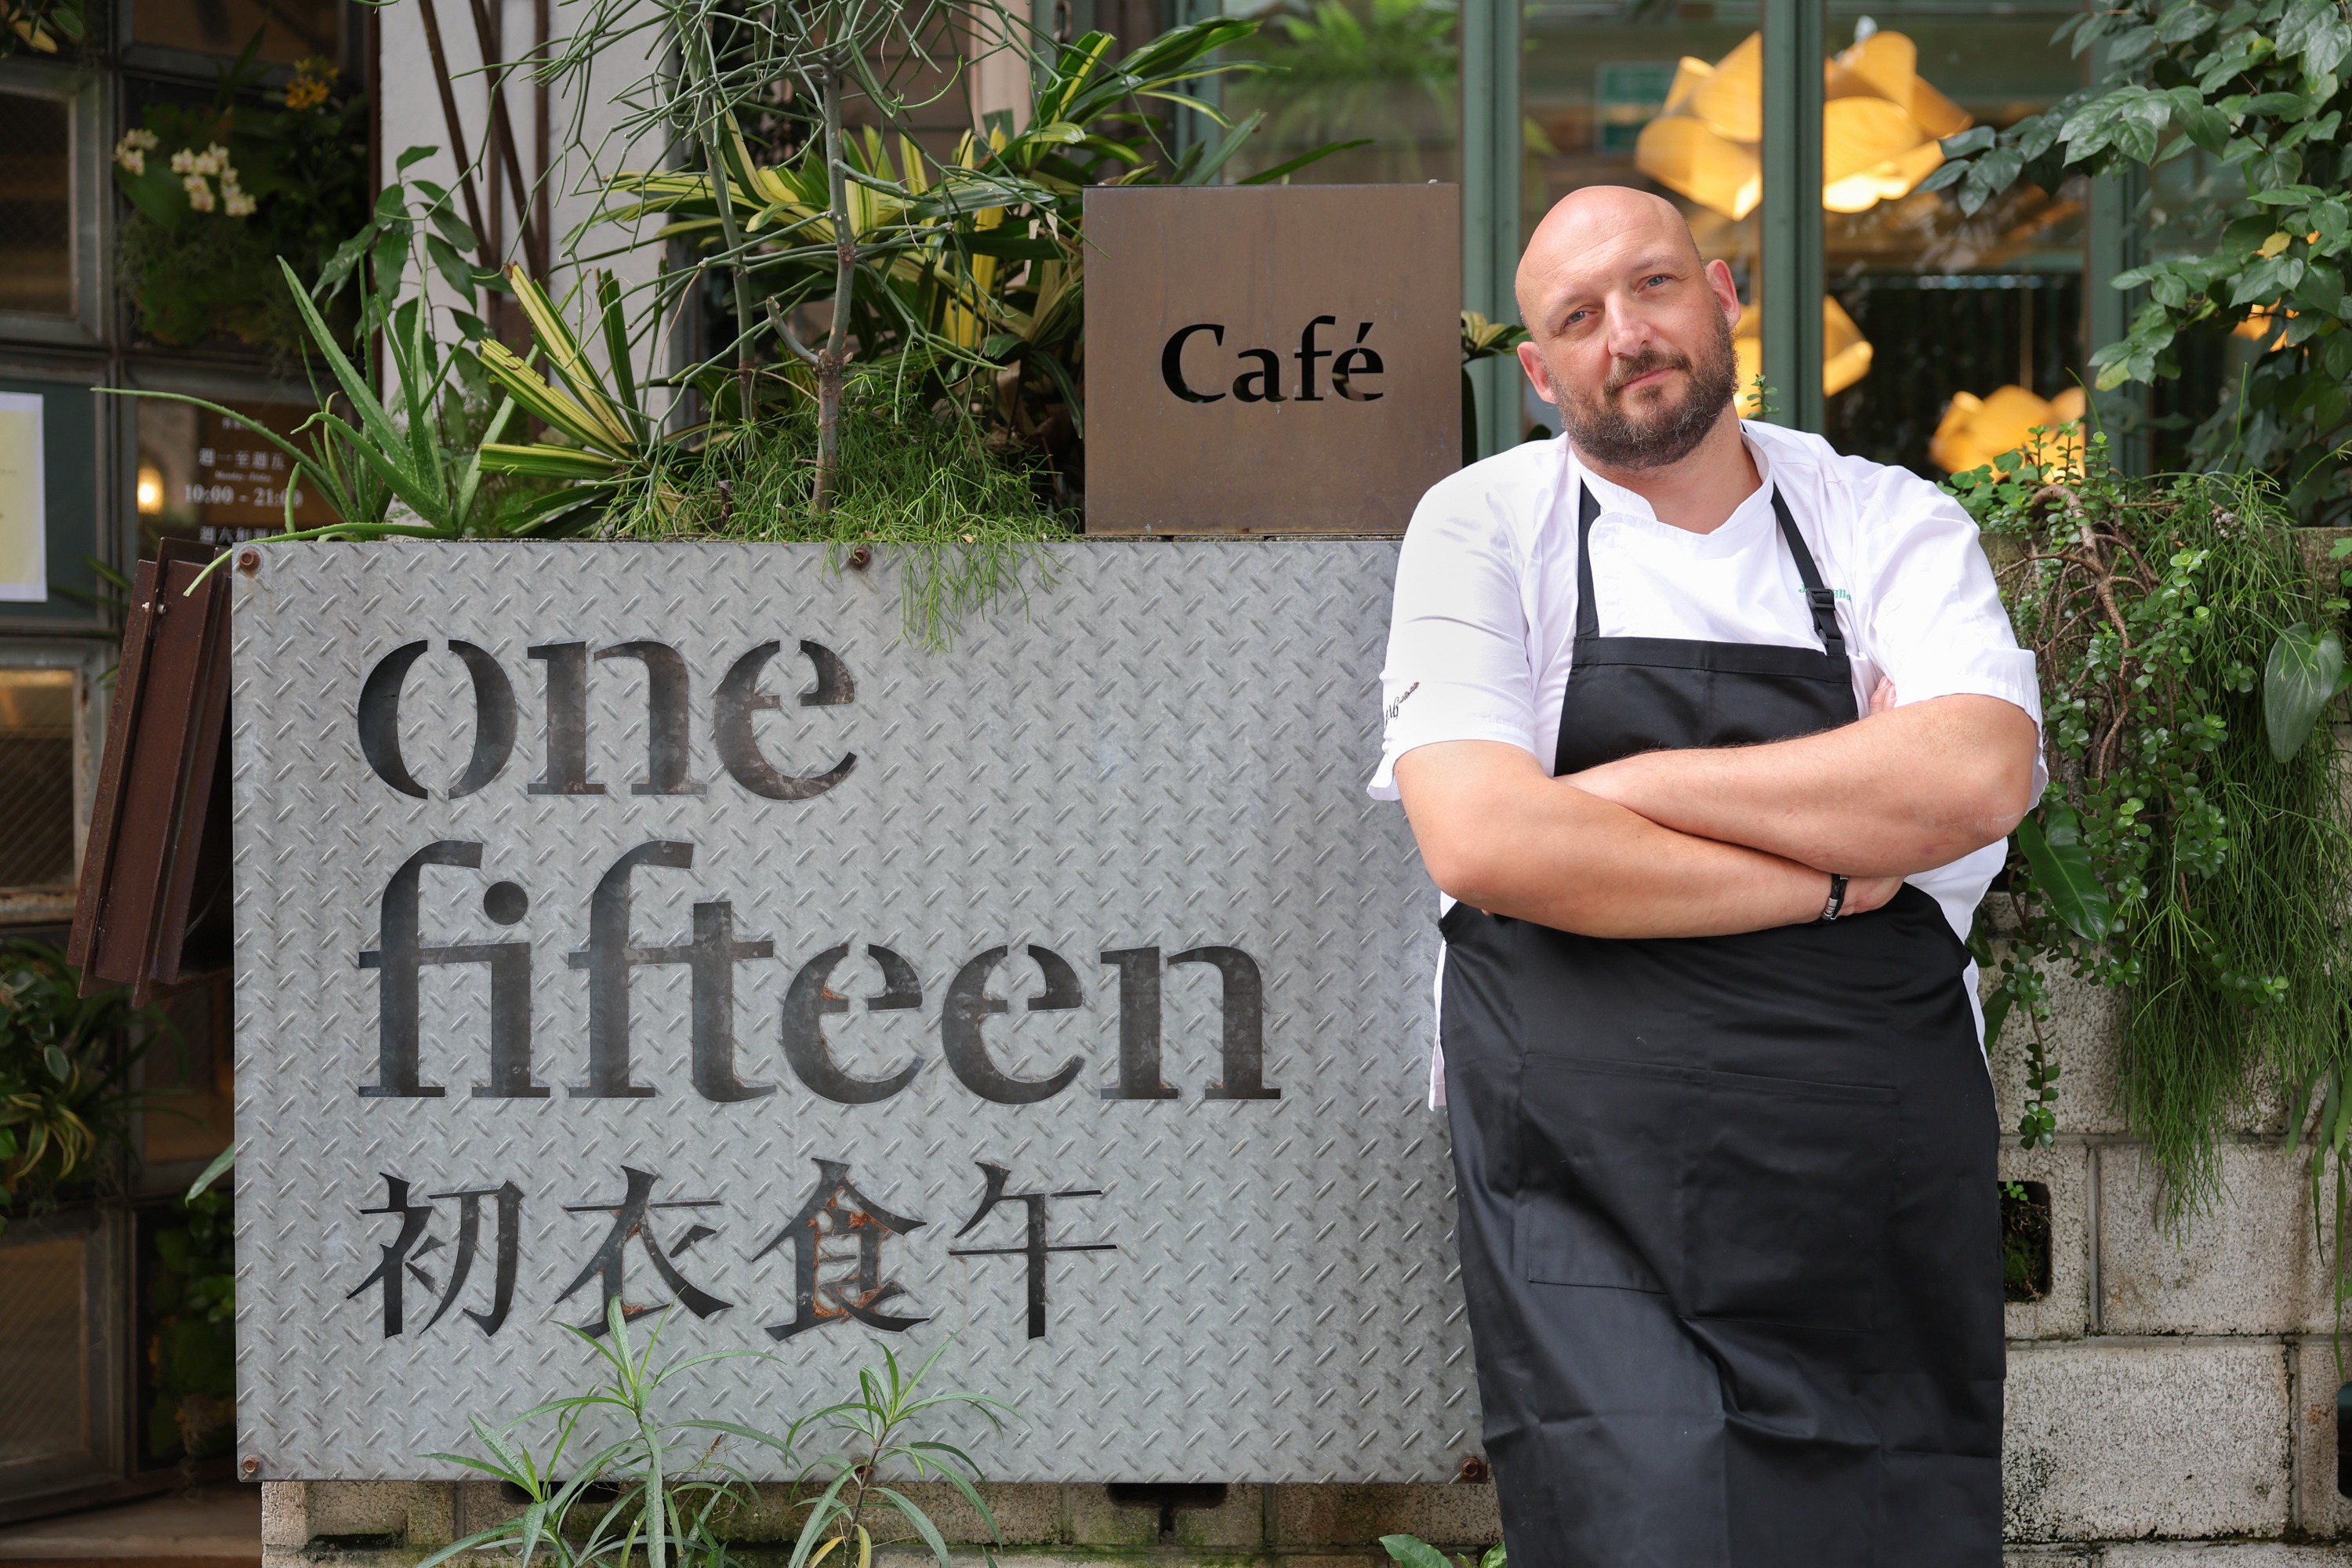 onefifteen Café用餐體驗再提升 邀<u>米其林</u>星級主廚客座打造限定菜色 